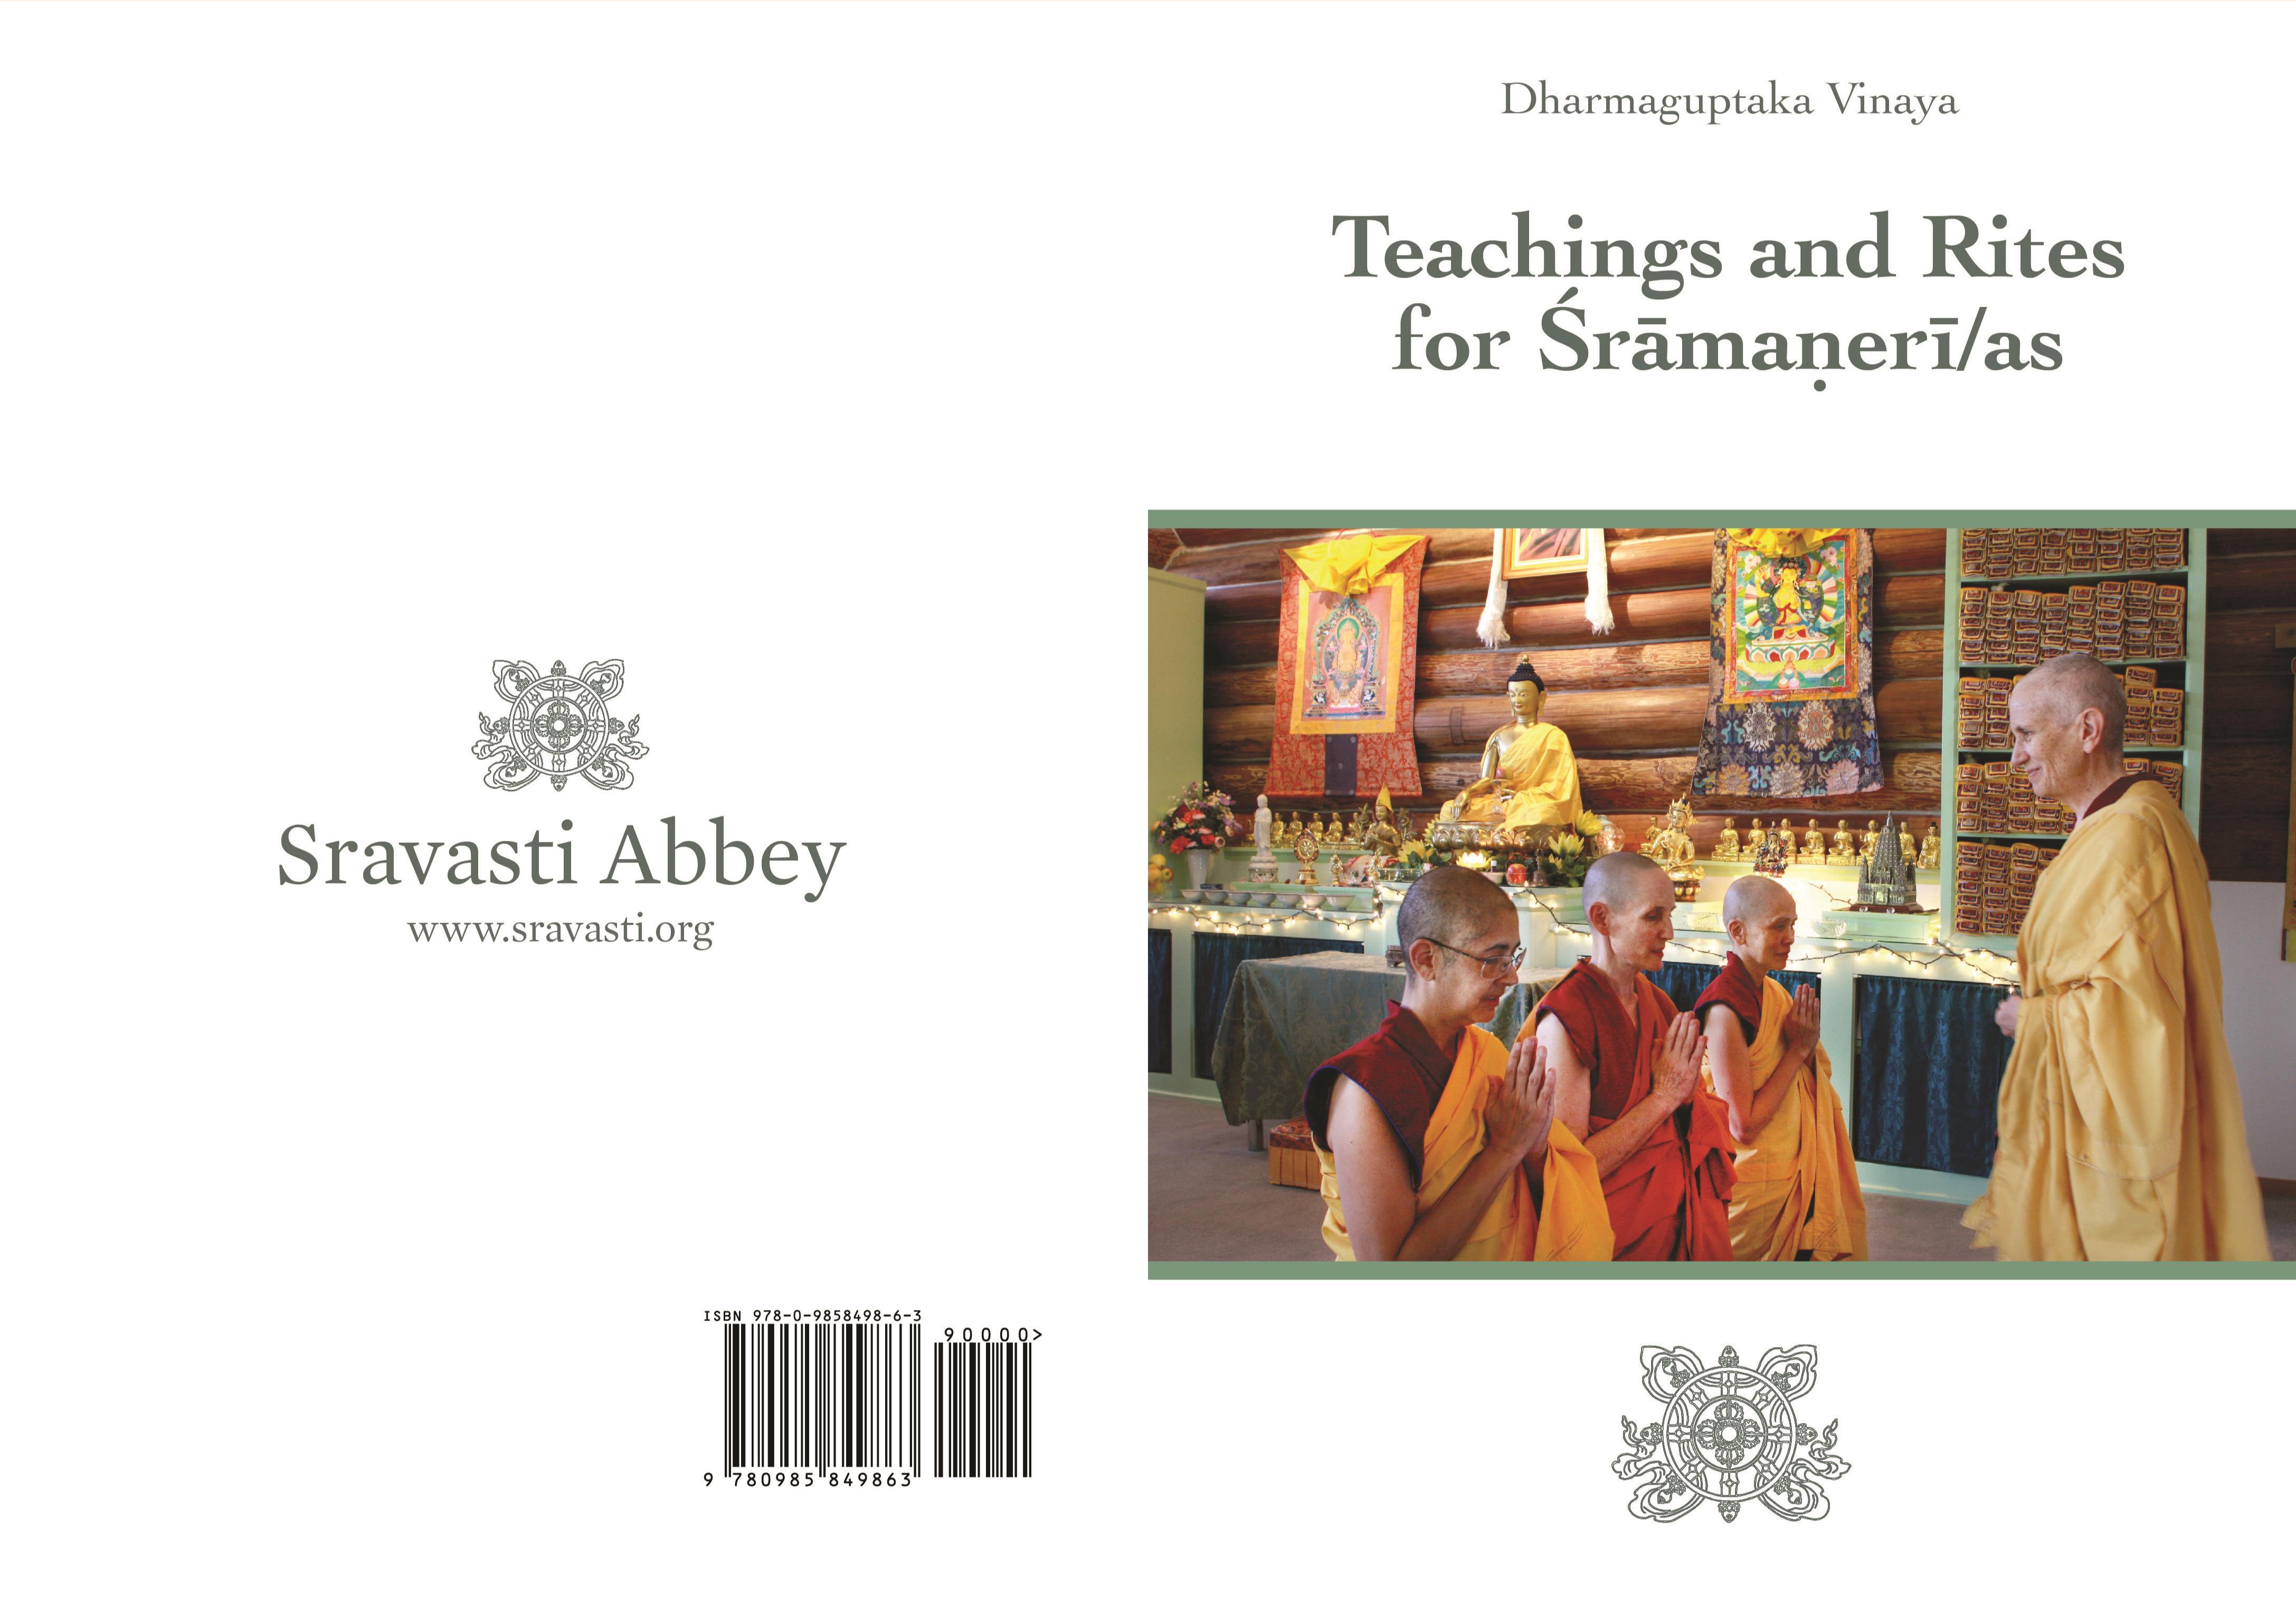 Dharmaguptaka Vinaya Teachings and Rites for Sramaneri/as cover image